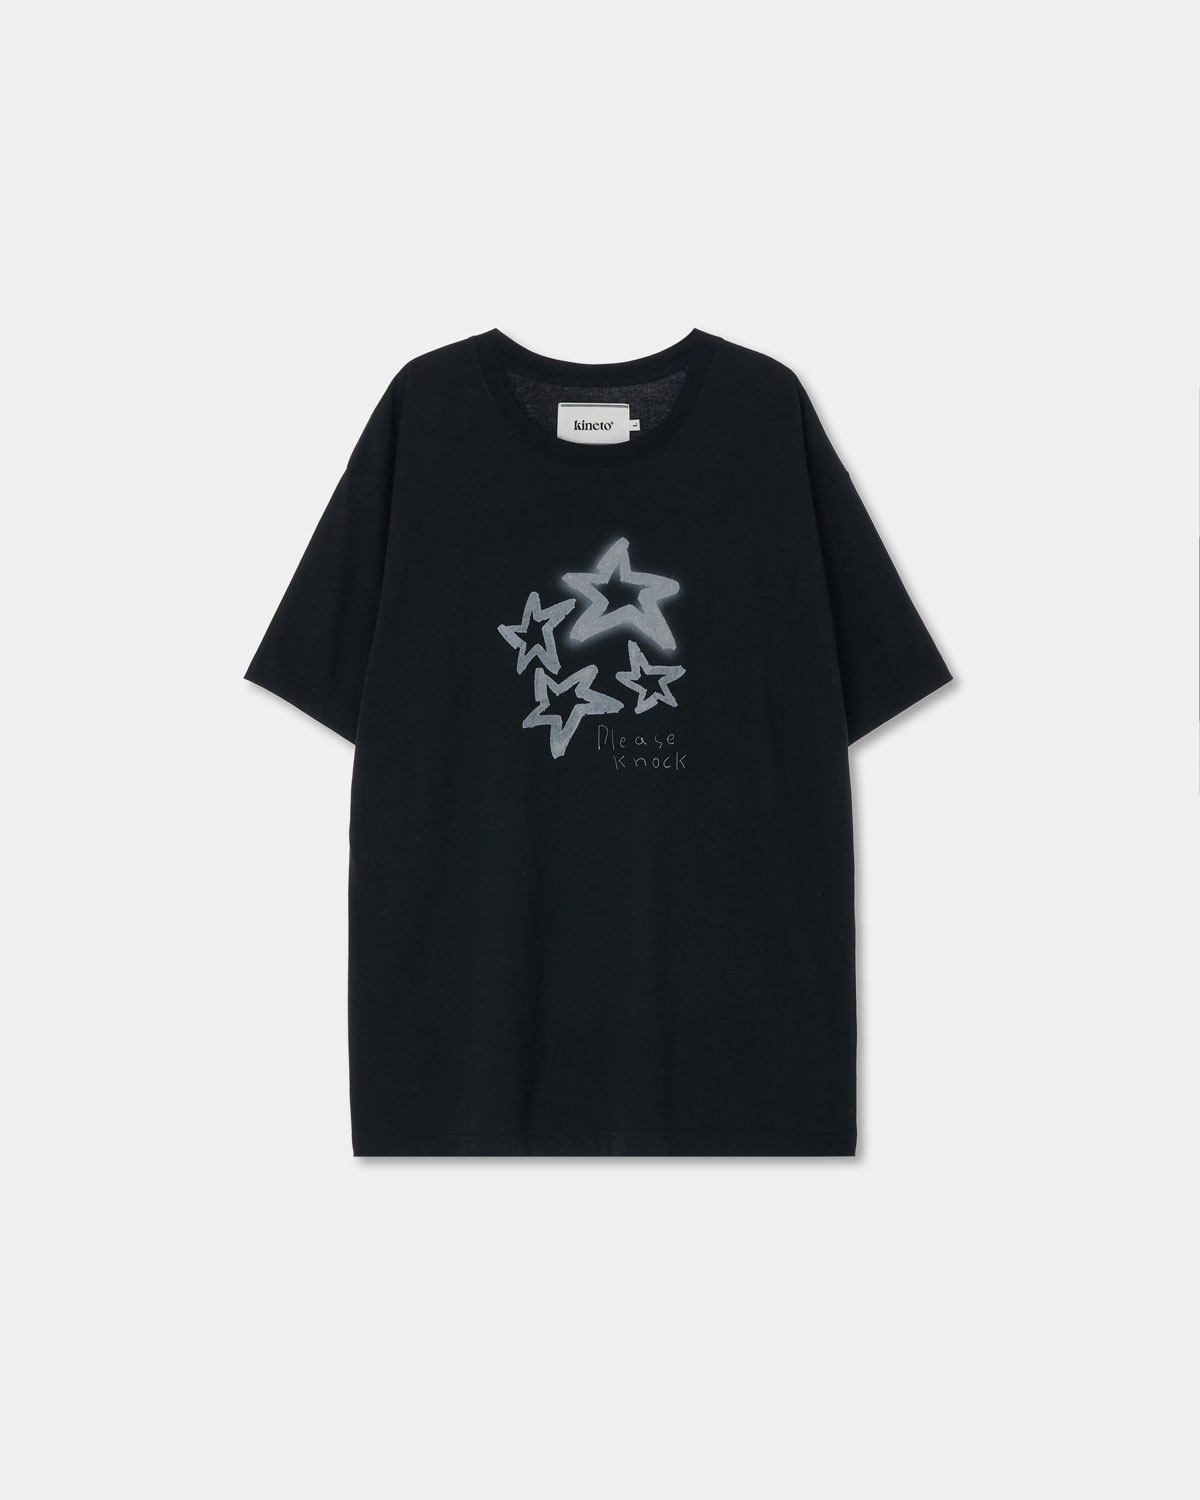 Star Shine Embo Print T-Shirt_Black_예약 배송 05/13